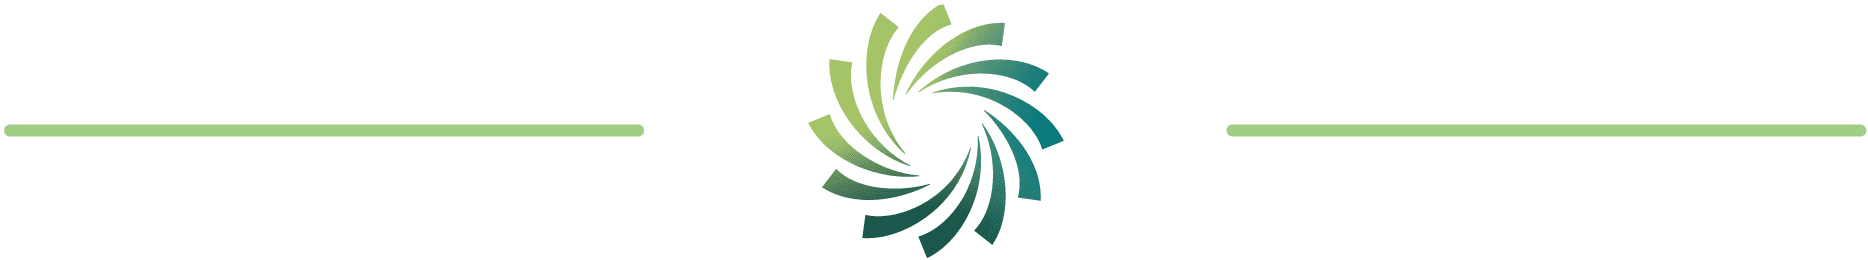 ETB swirl logo 